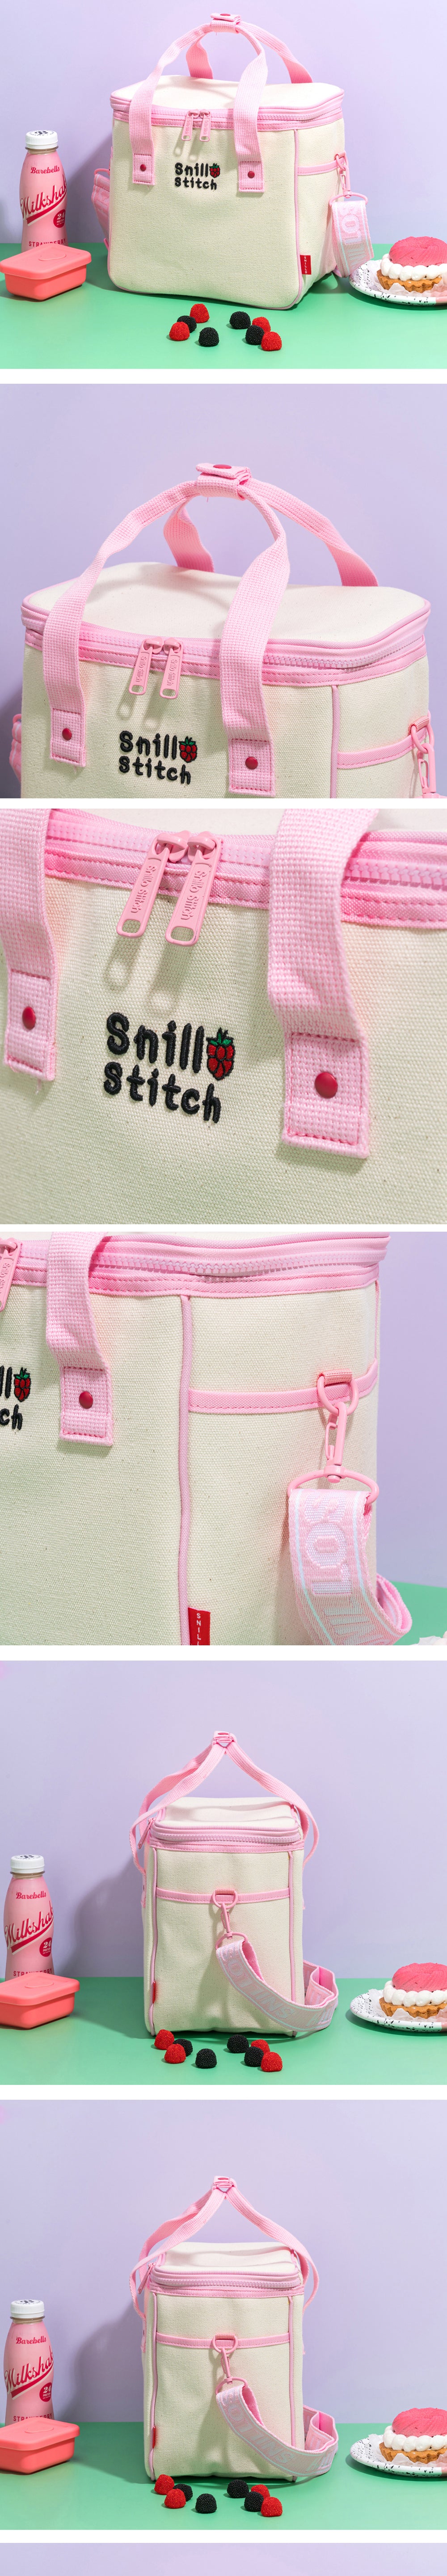 SNILLO STITCH Canvas Picnic Cooler Bag Raspberry - Pink